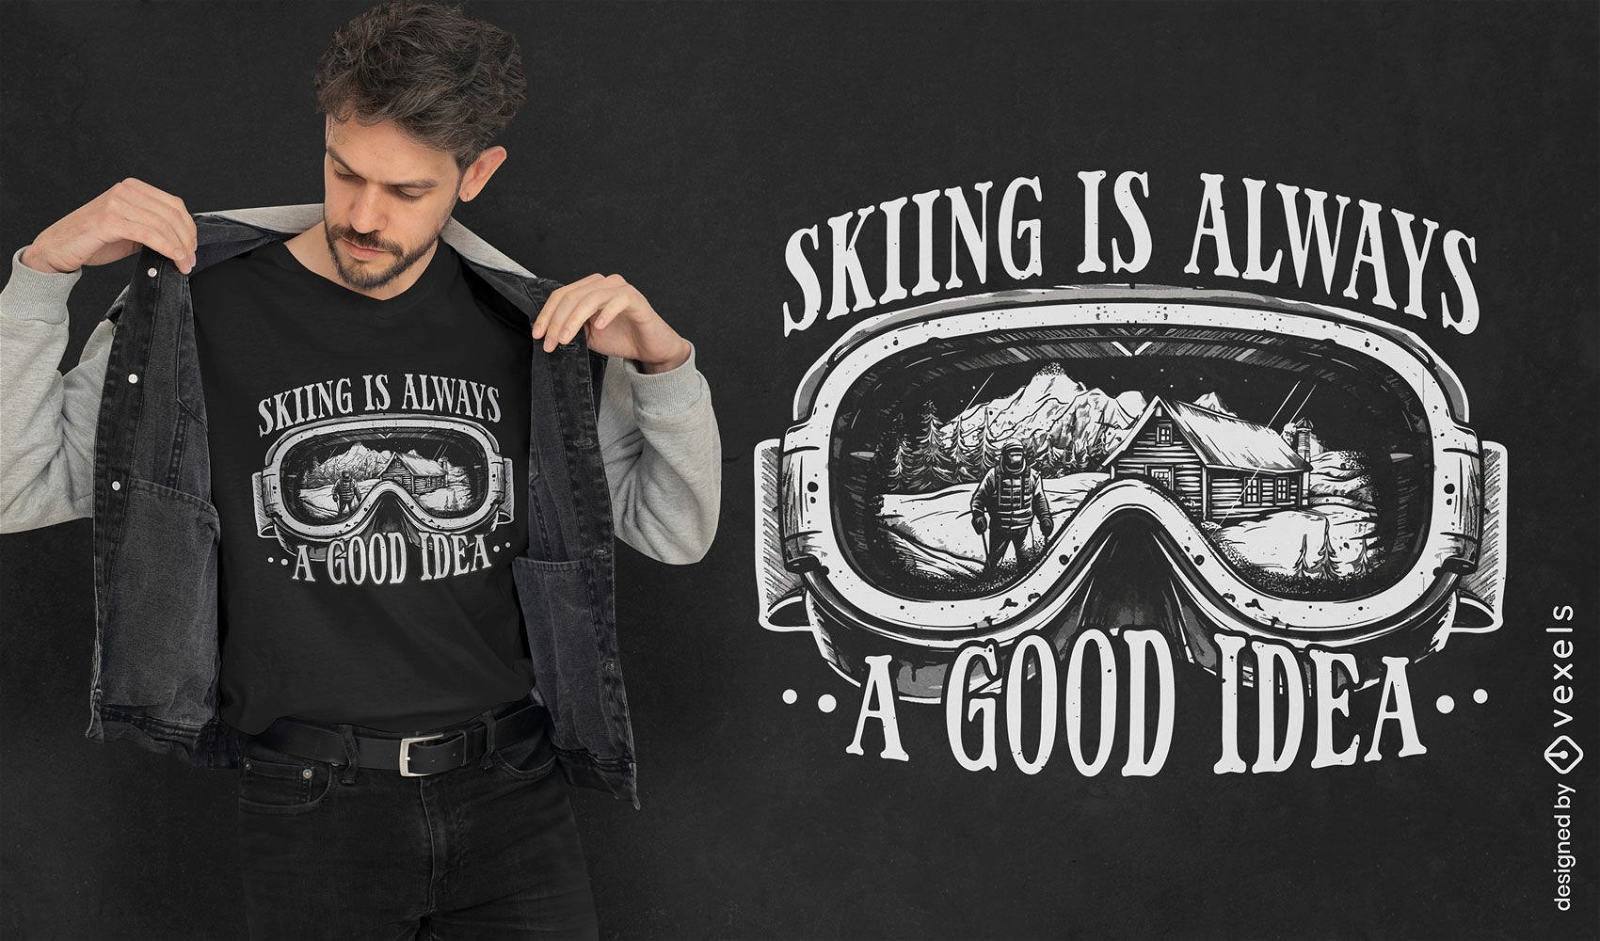 Skiing is always a good idea t-shirt design